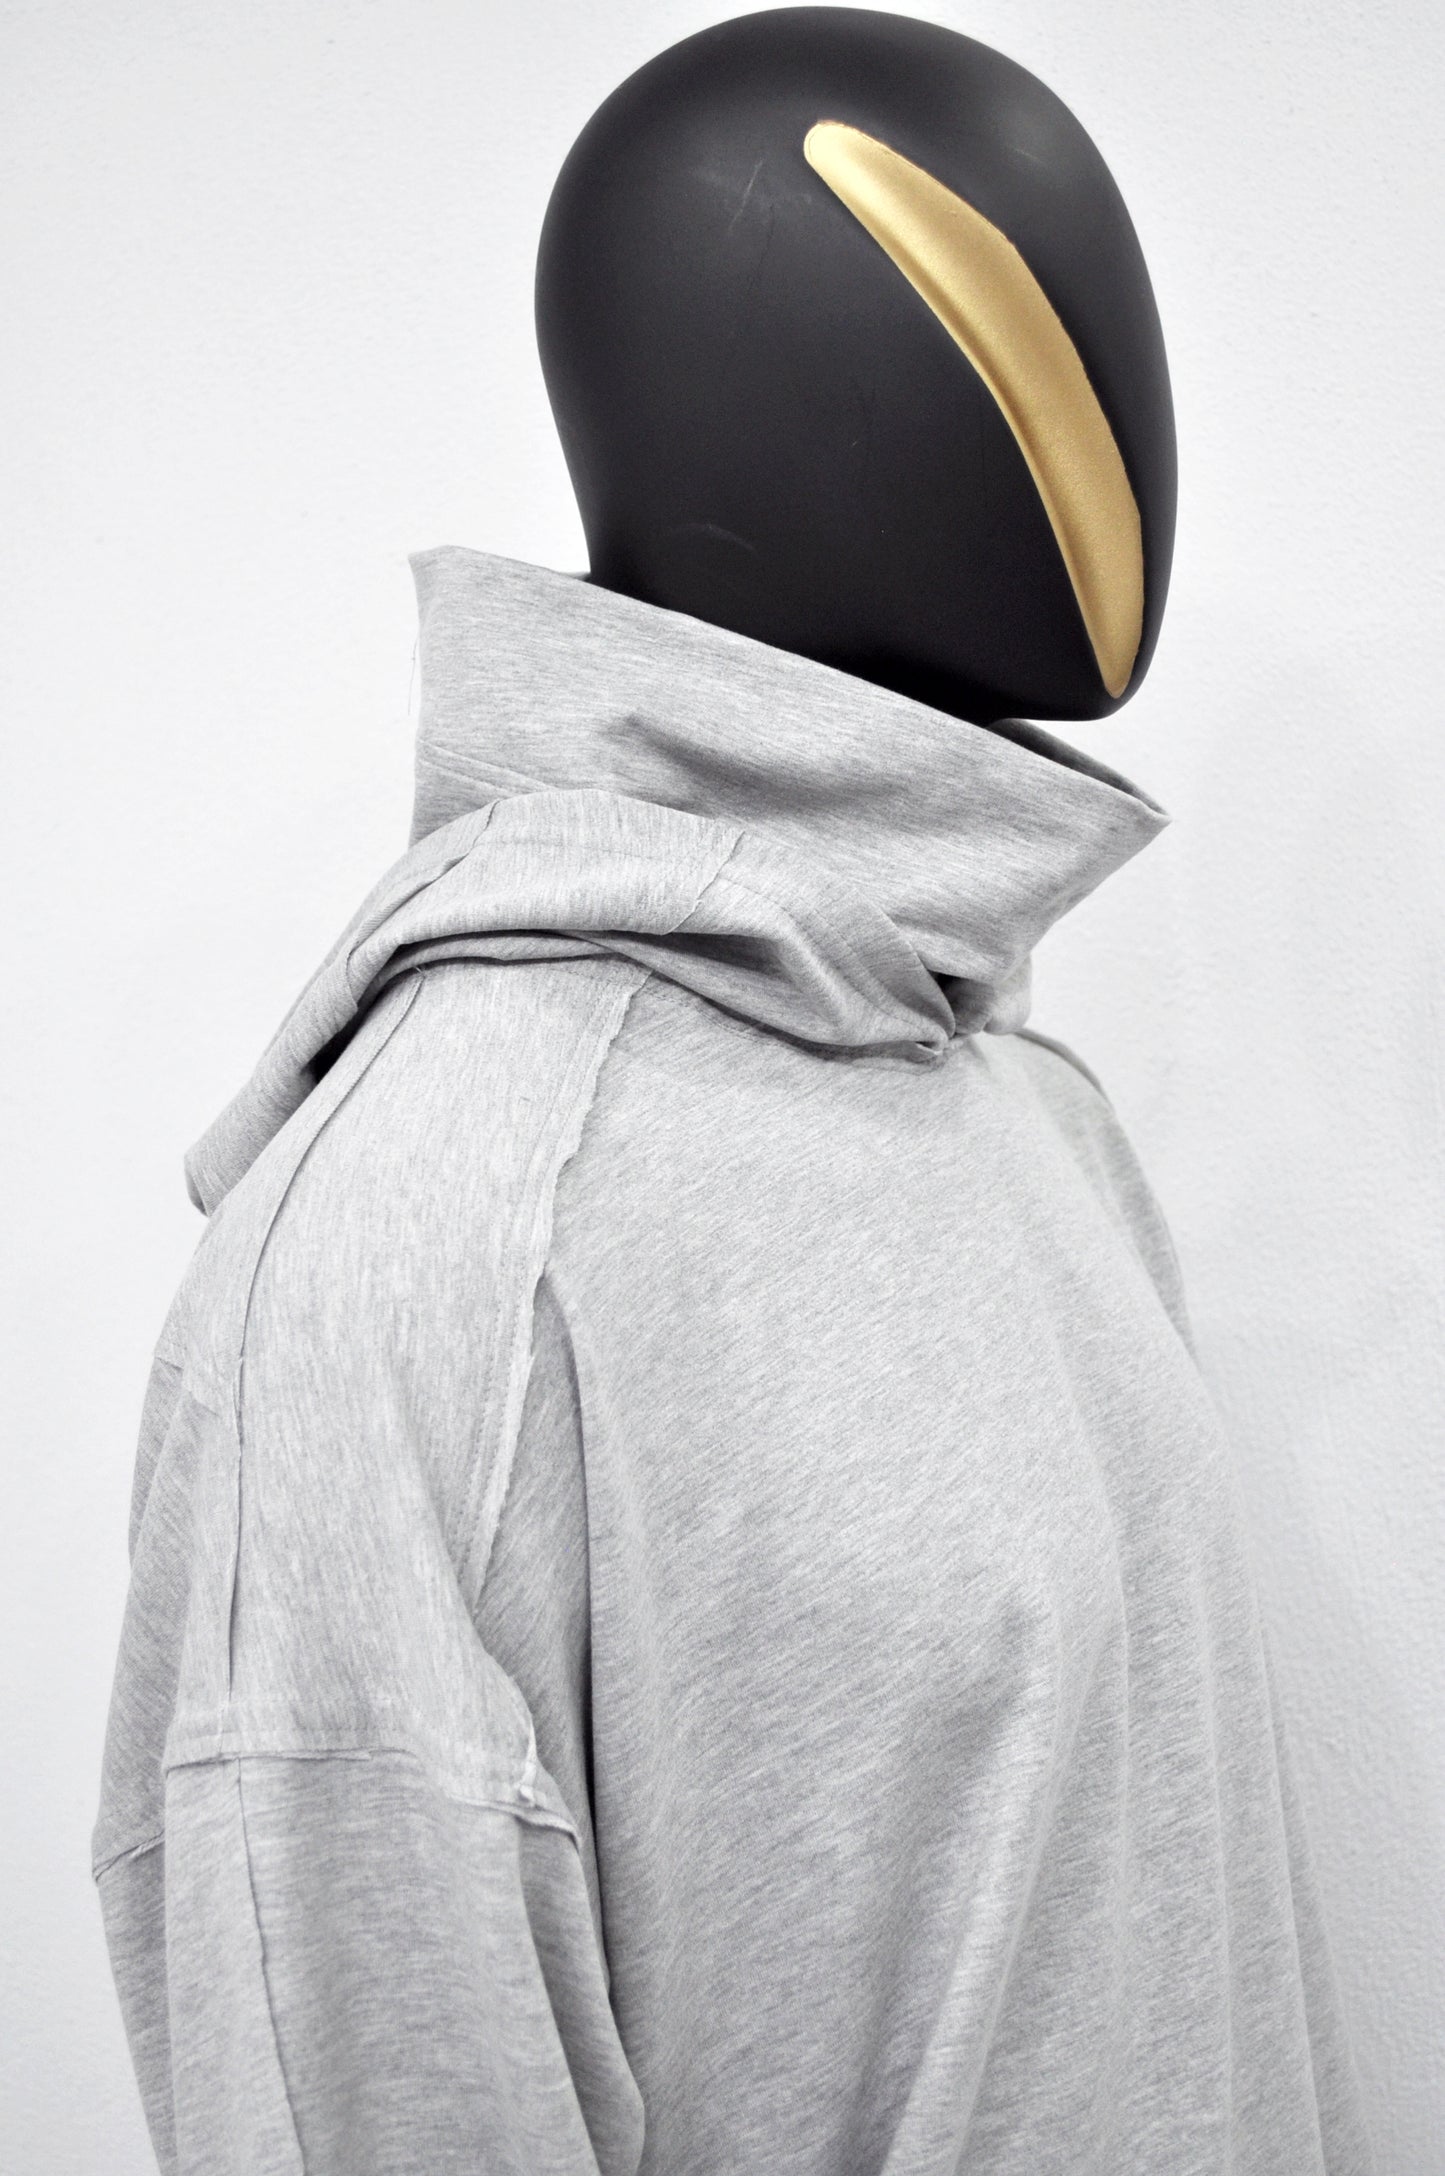 XS-8XL Men's Distressed Structured Silhouette Hooded Turtleneck Sweatshirt,Ashassin Asymetrical Cardigan,Cyber Futuristic Burning Man-BB0159